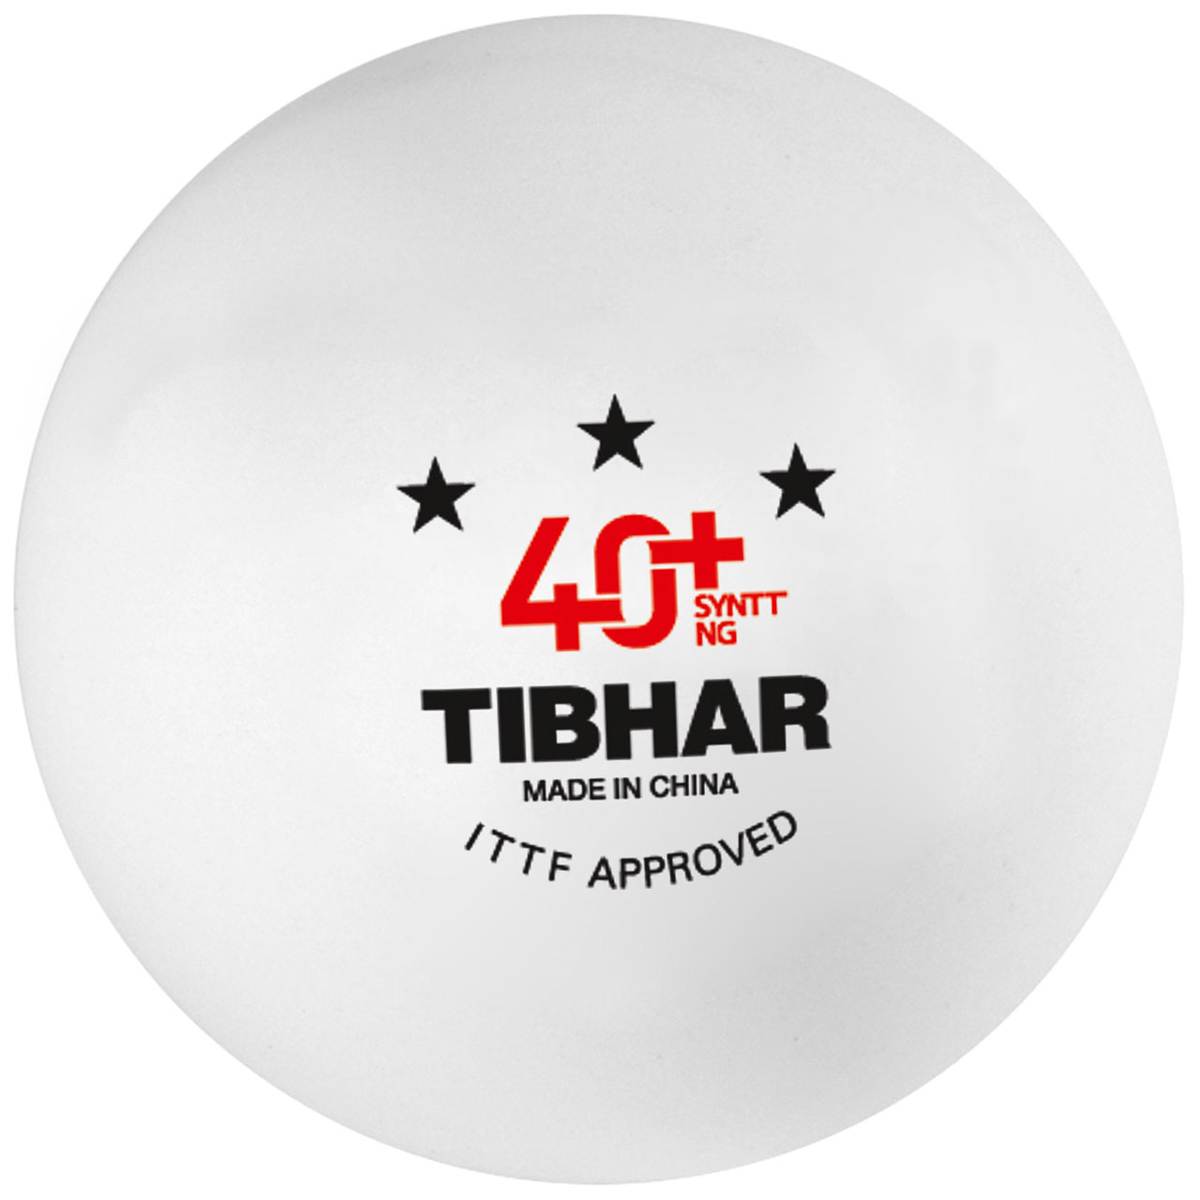 TIBHAR Ball *** 40+ SYNTT NG 72er weiß